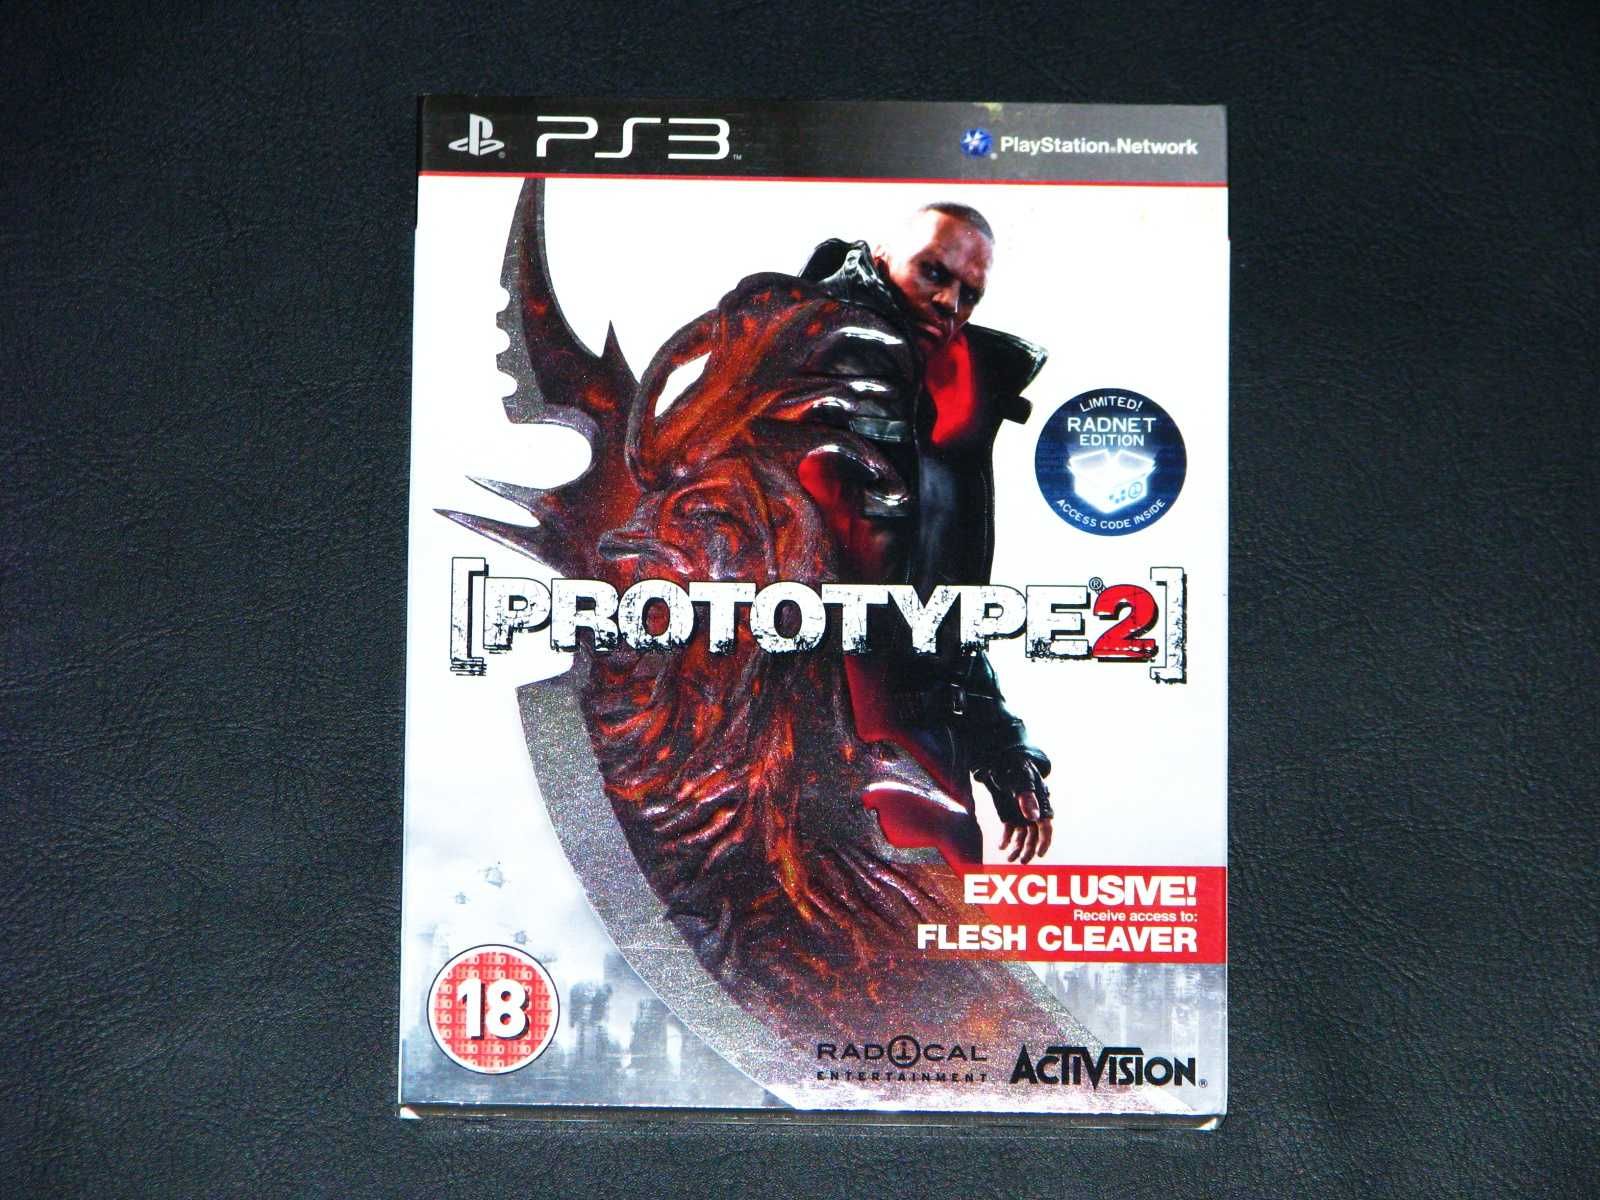 Gra PS3 Prototype 2 + Płyta The Making Of Stan Kolekcjonerski Jak Nowa